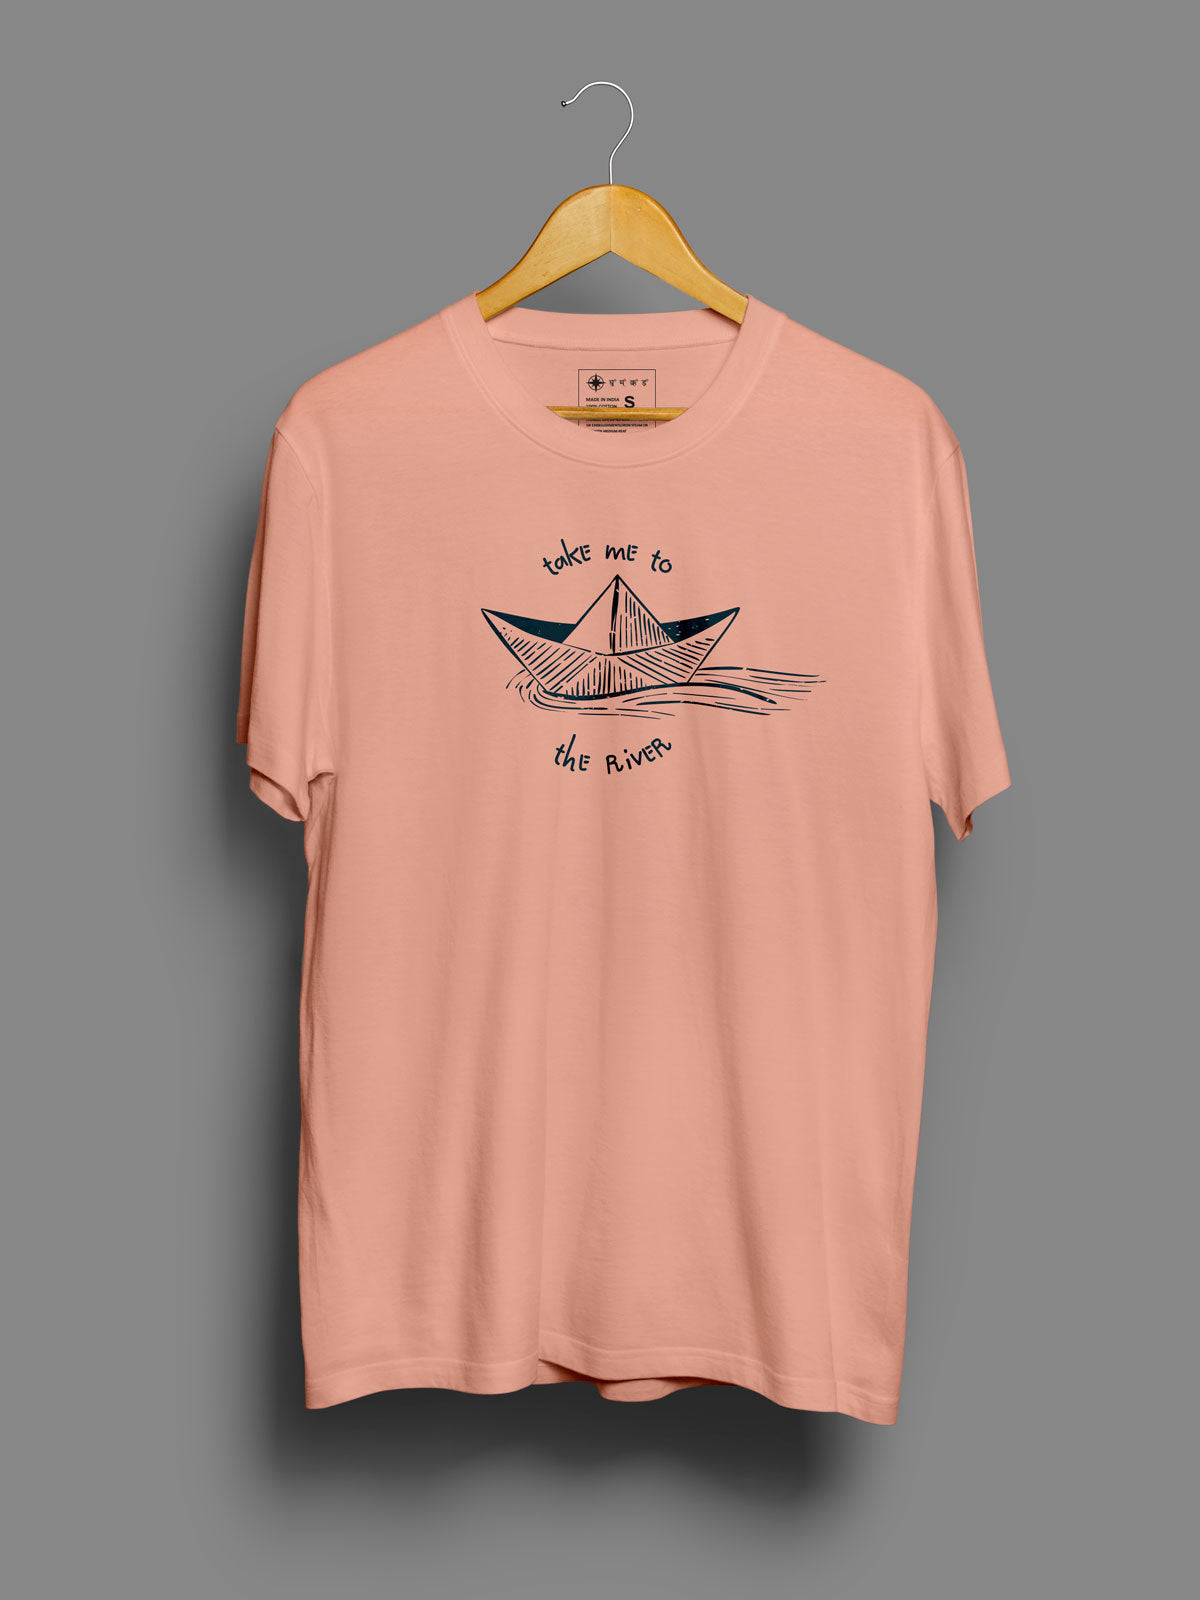 River-Peach-printed-t-shirt-for-men by Ghumakkad